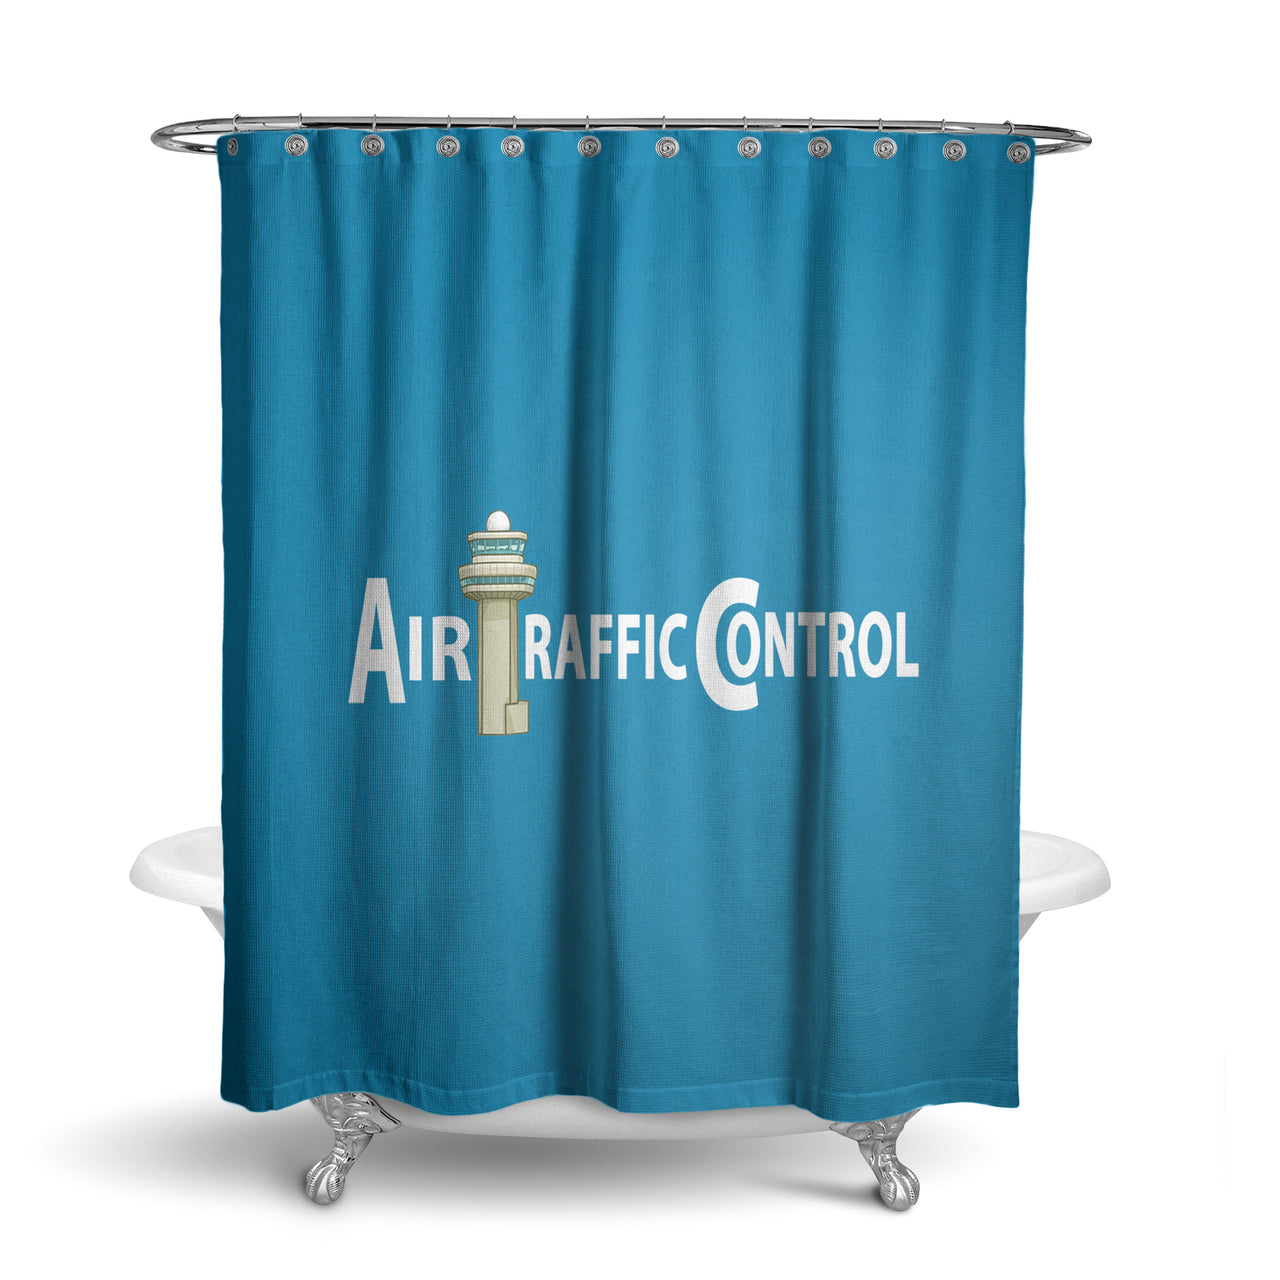 Air Traffic Control Designed Shower Curtains